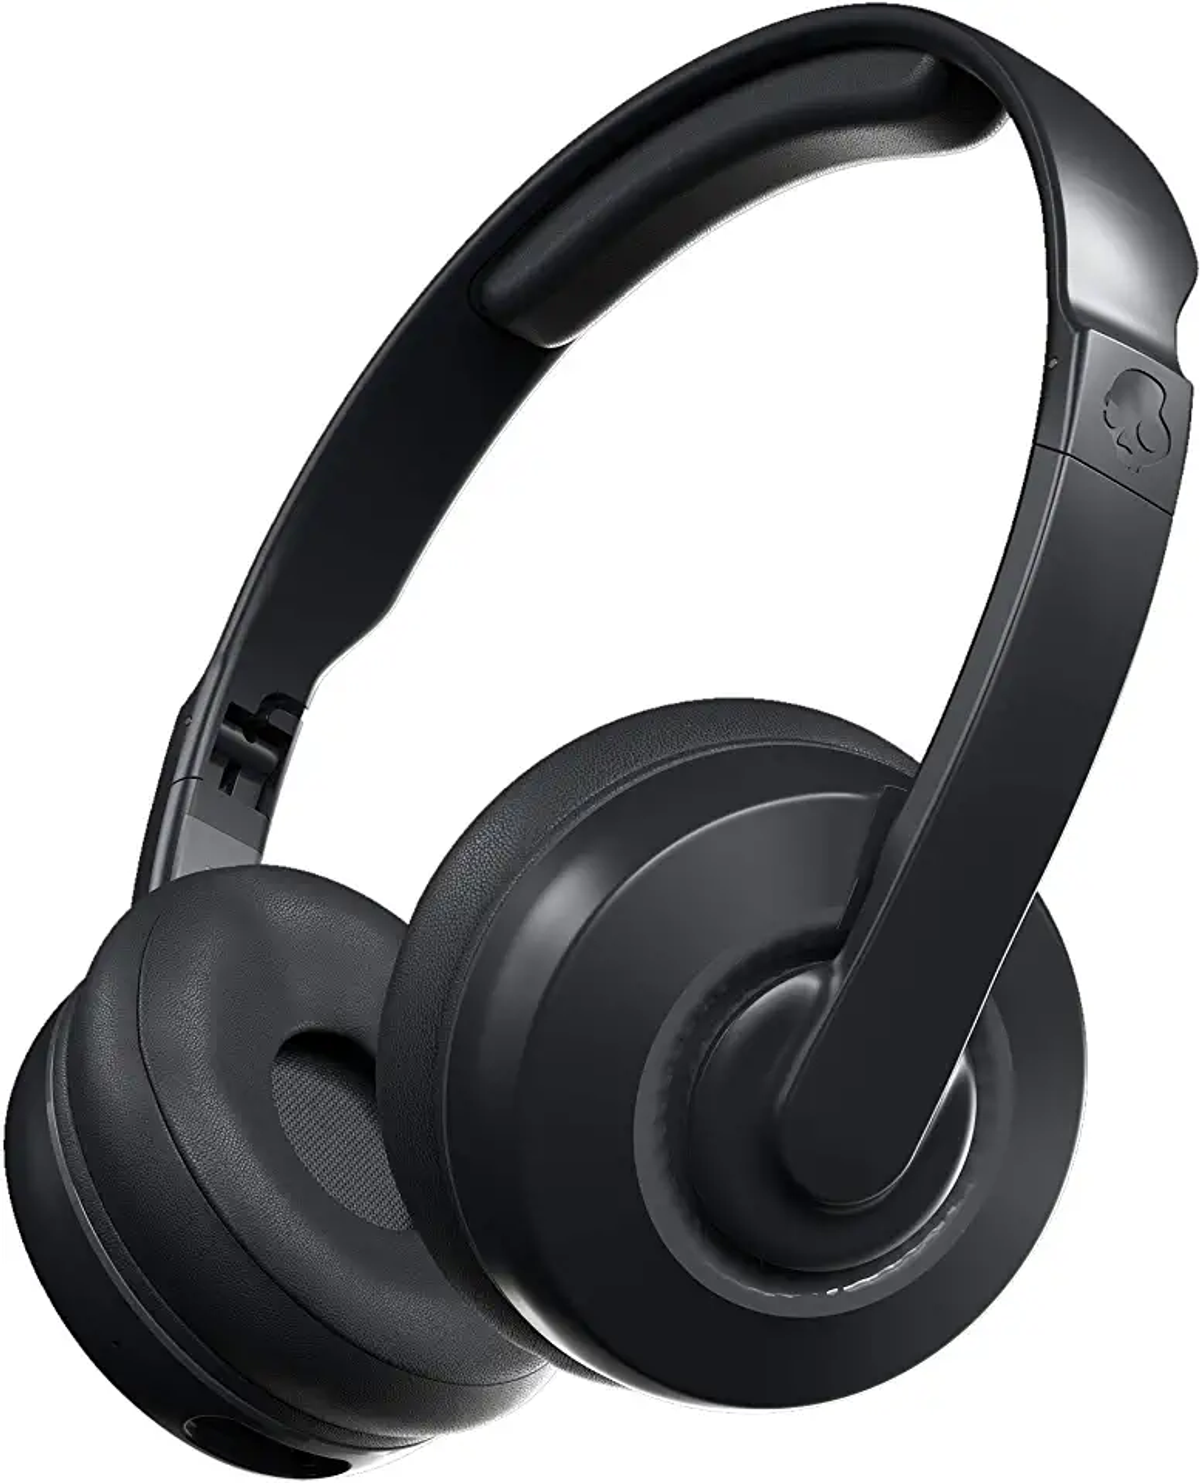 SKULLCANDY On-ear kopfhörer S5CSW-M448, Schwarz Bluetooth Bluetooth